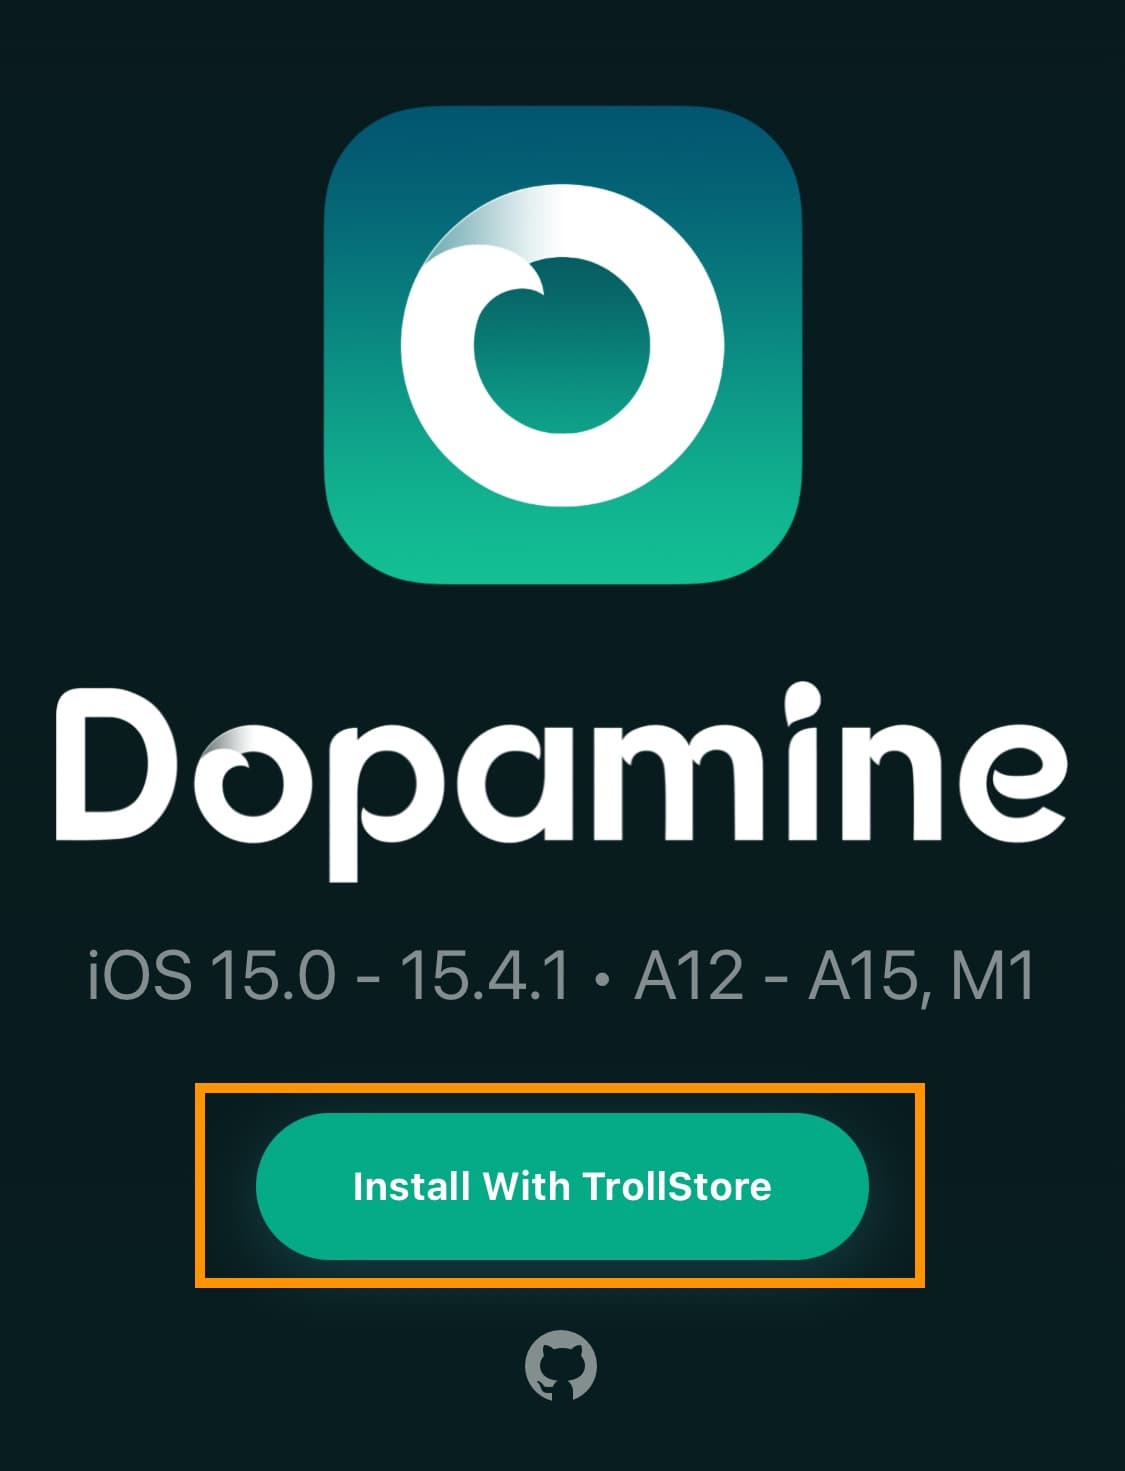 Dopamine website Install with TrollStore.